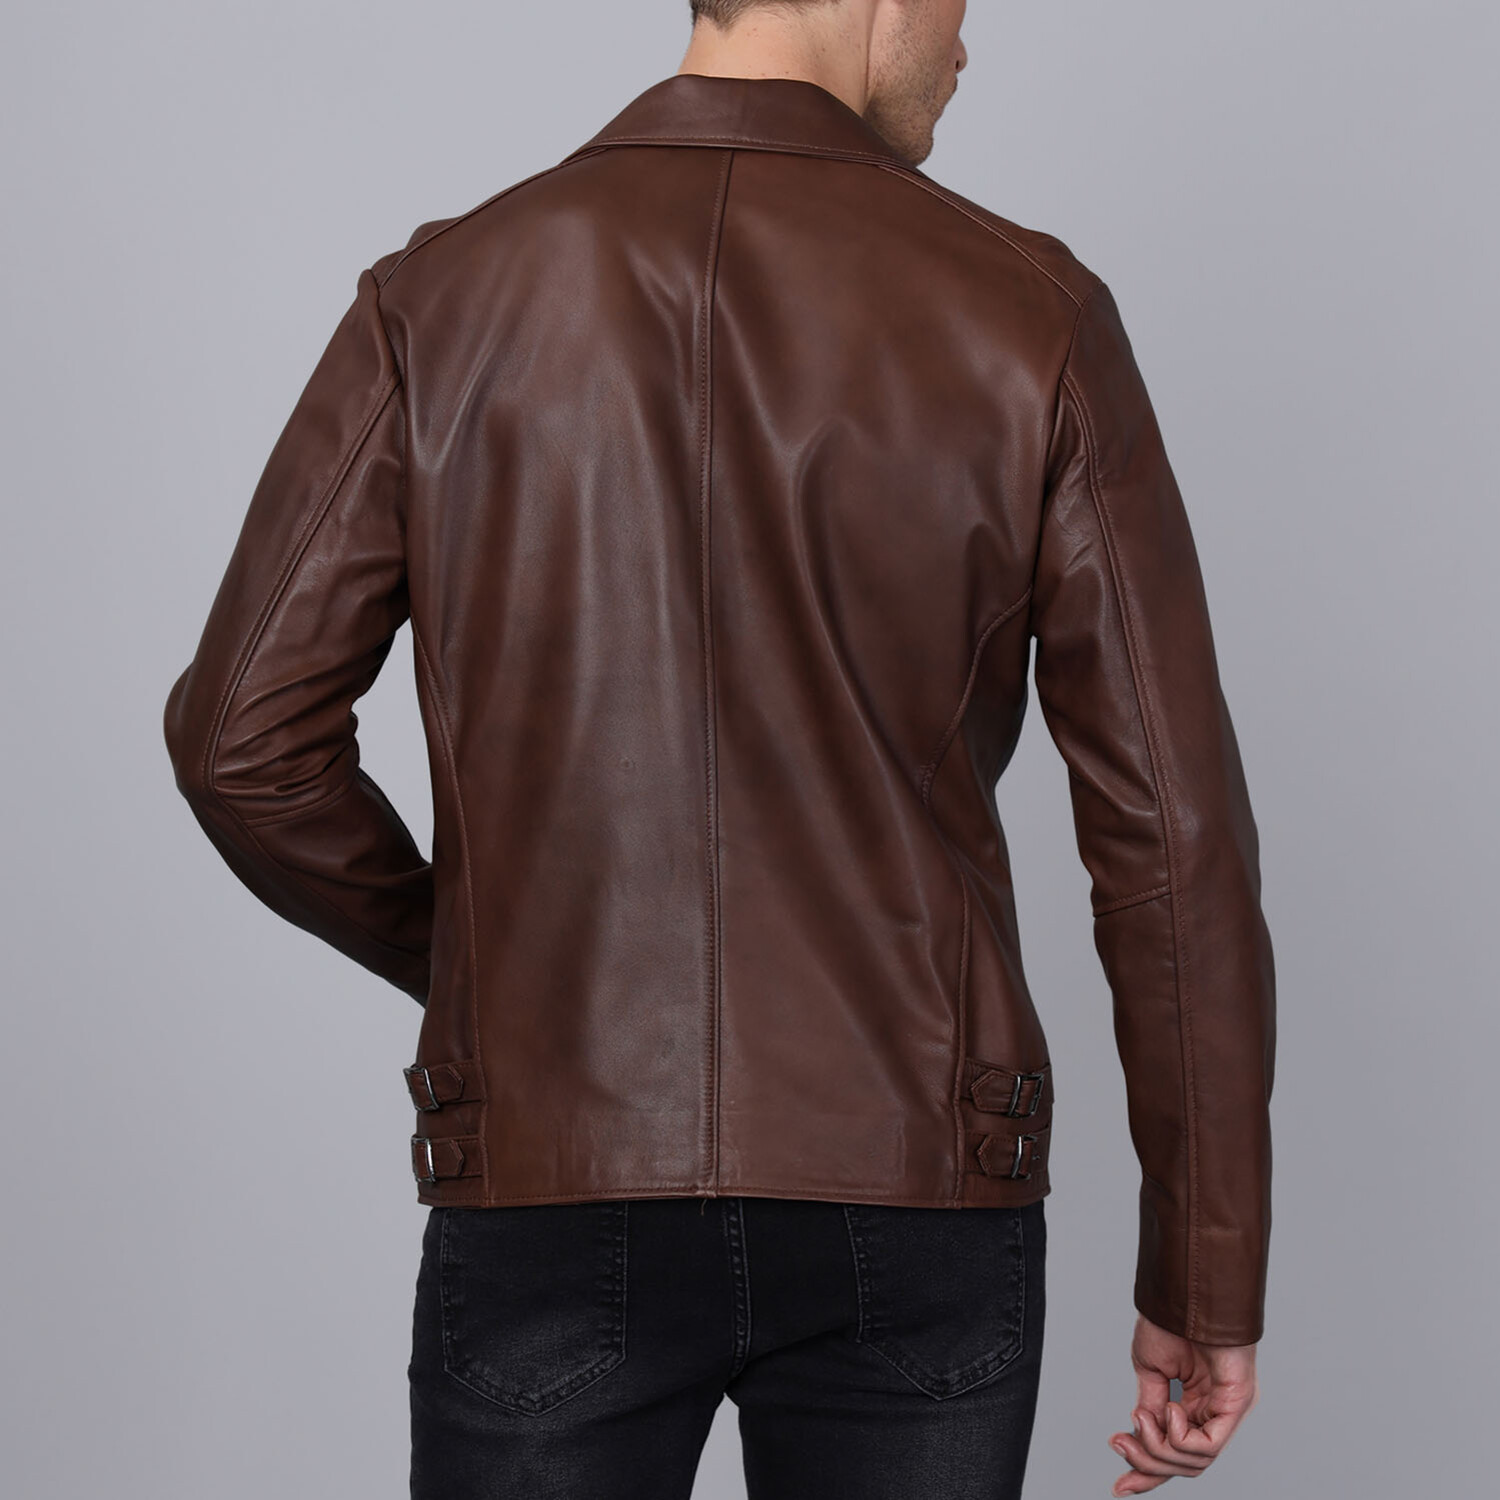 Allen Leather Jacket // Chestnut (XL) - Basics&More Leather Jackets ...